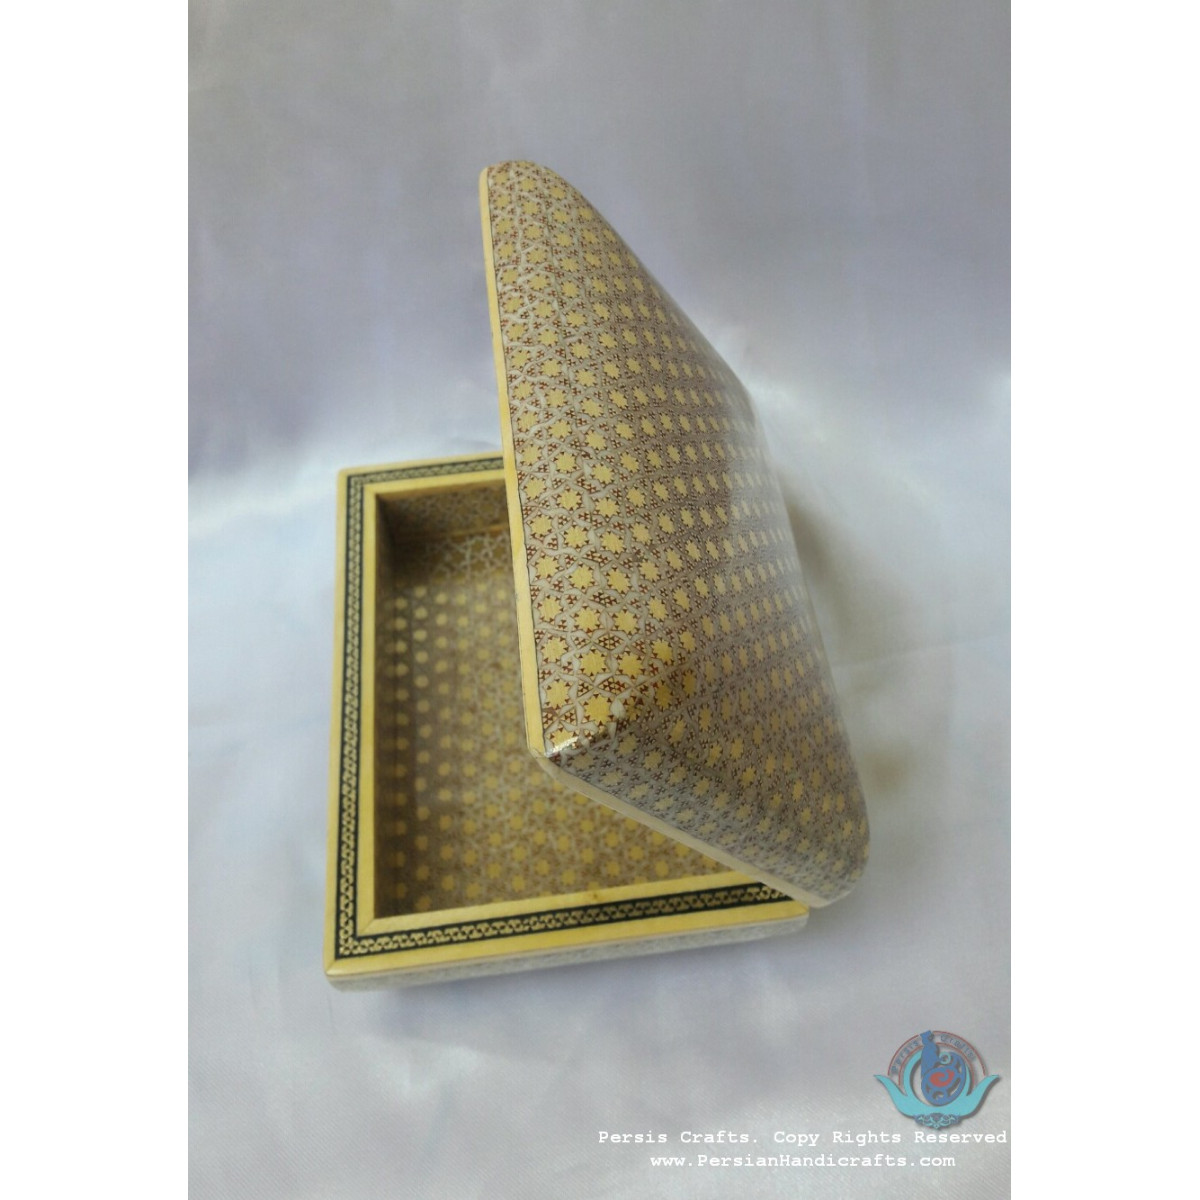 Khatam Wood Marquetry Jewelry Box Set - PKH1039-Persian Handicrafts